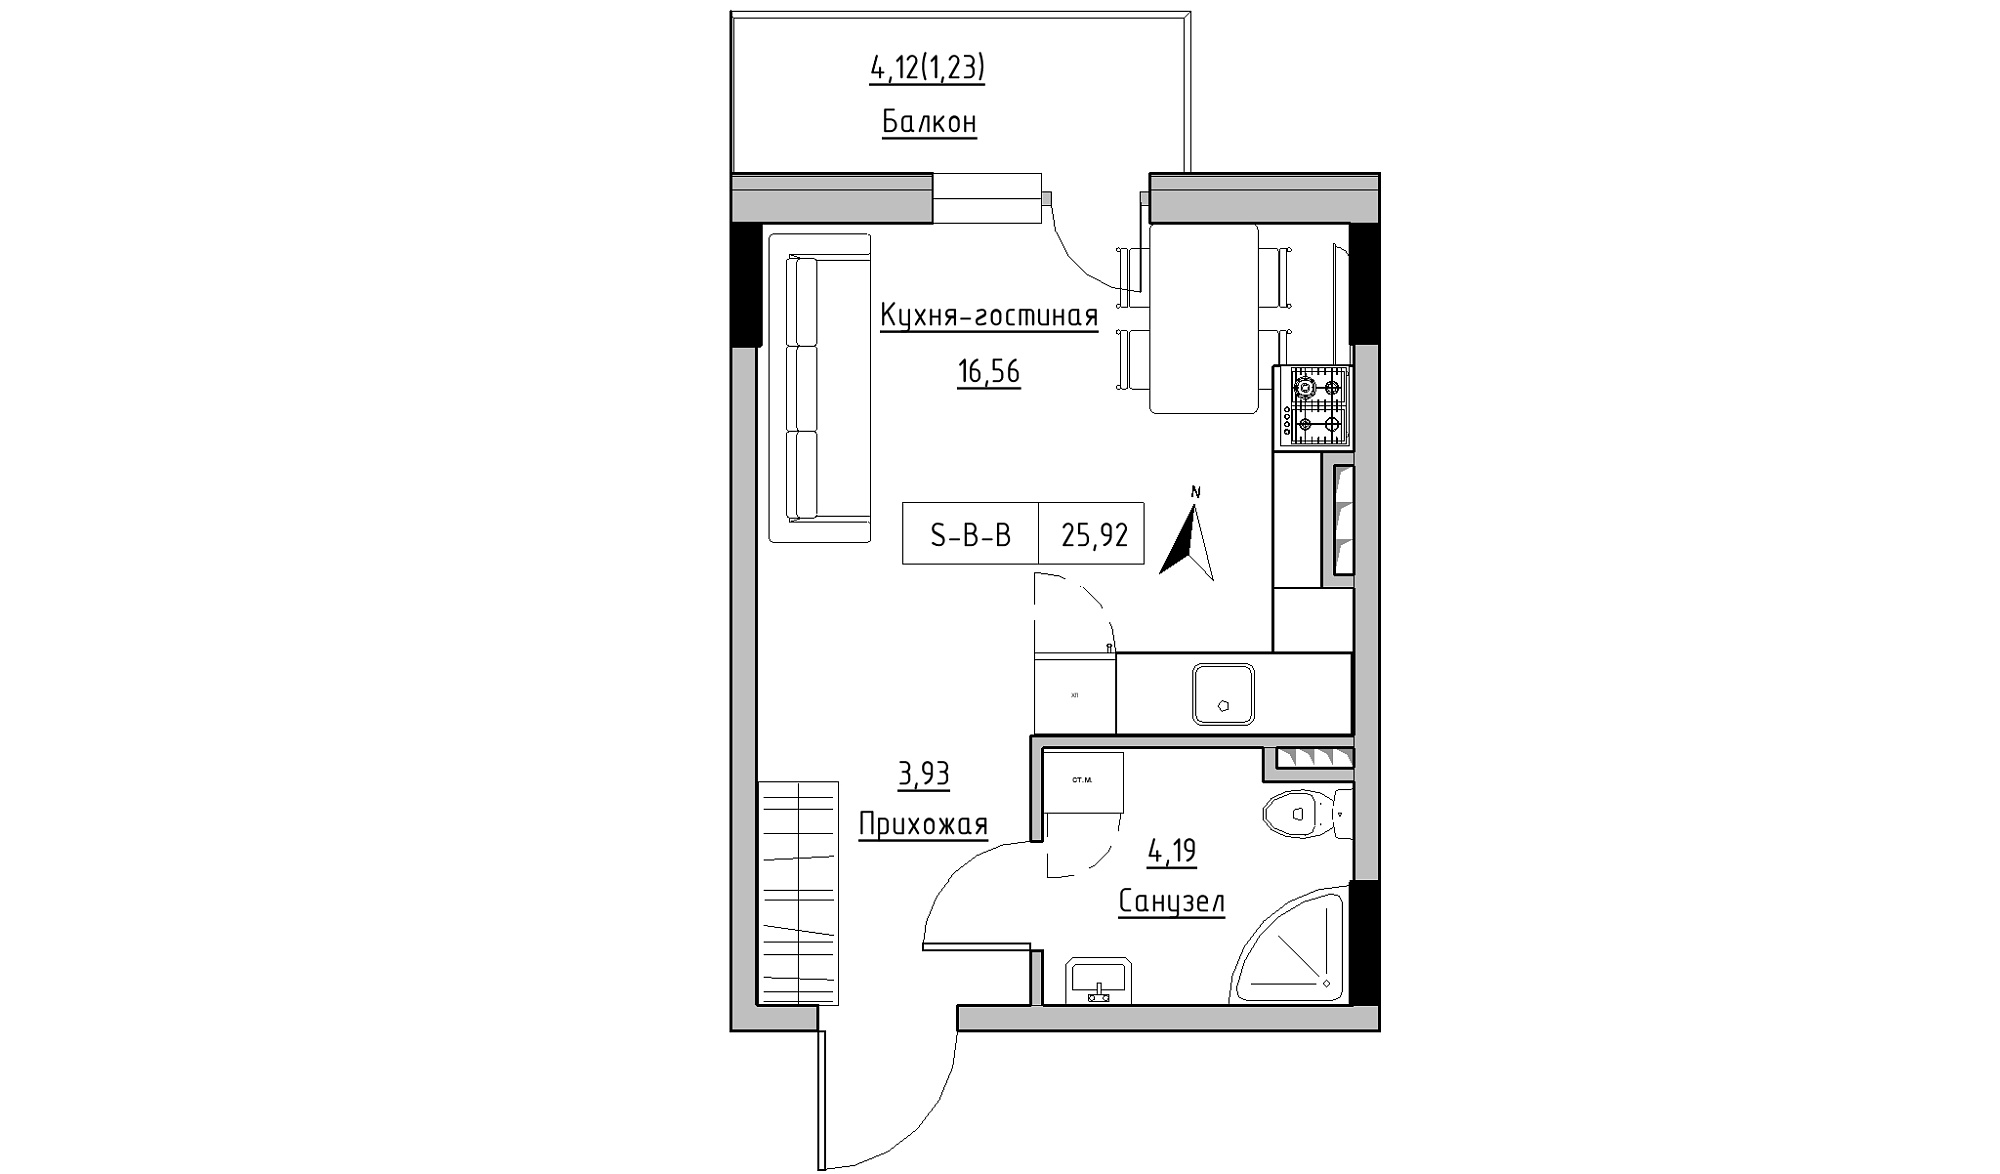 Planning Smart flats area 25.92m2, KS-025-03/0007.